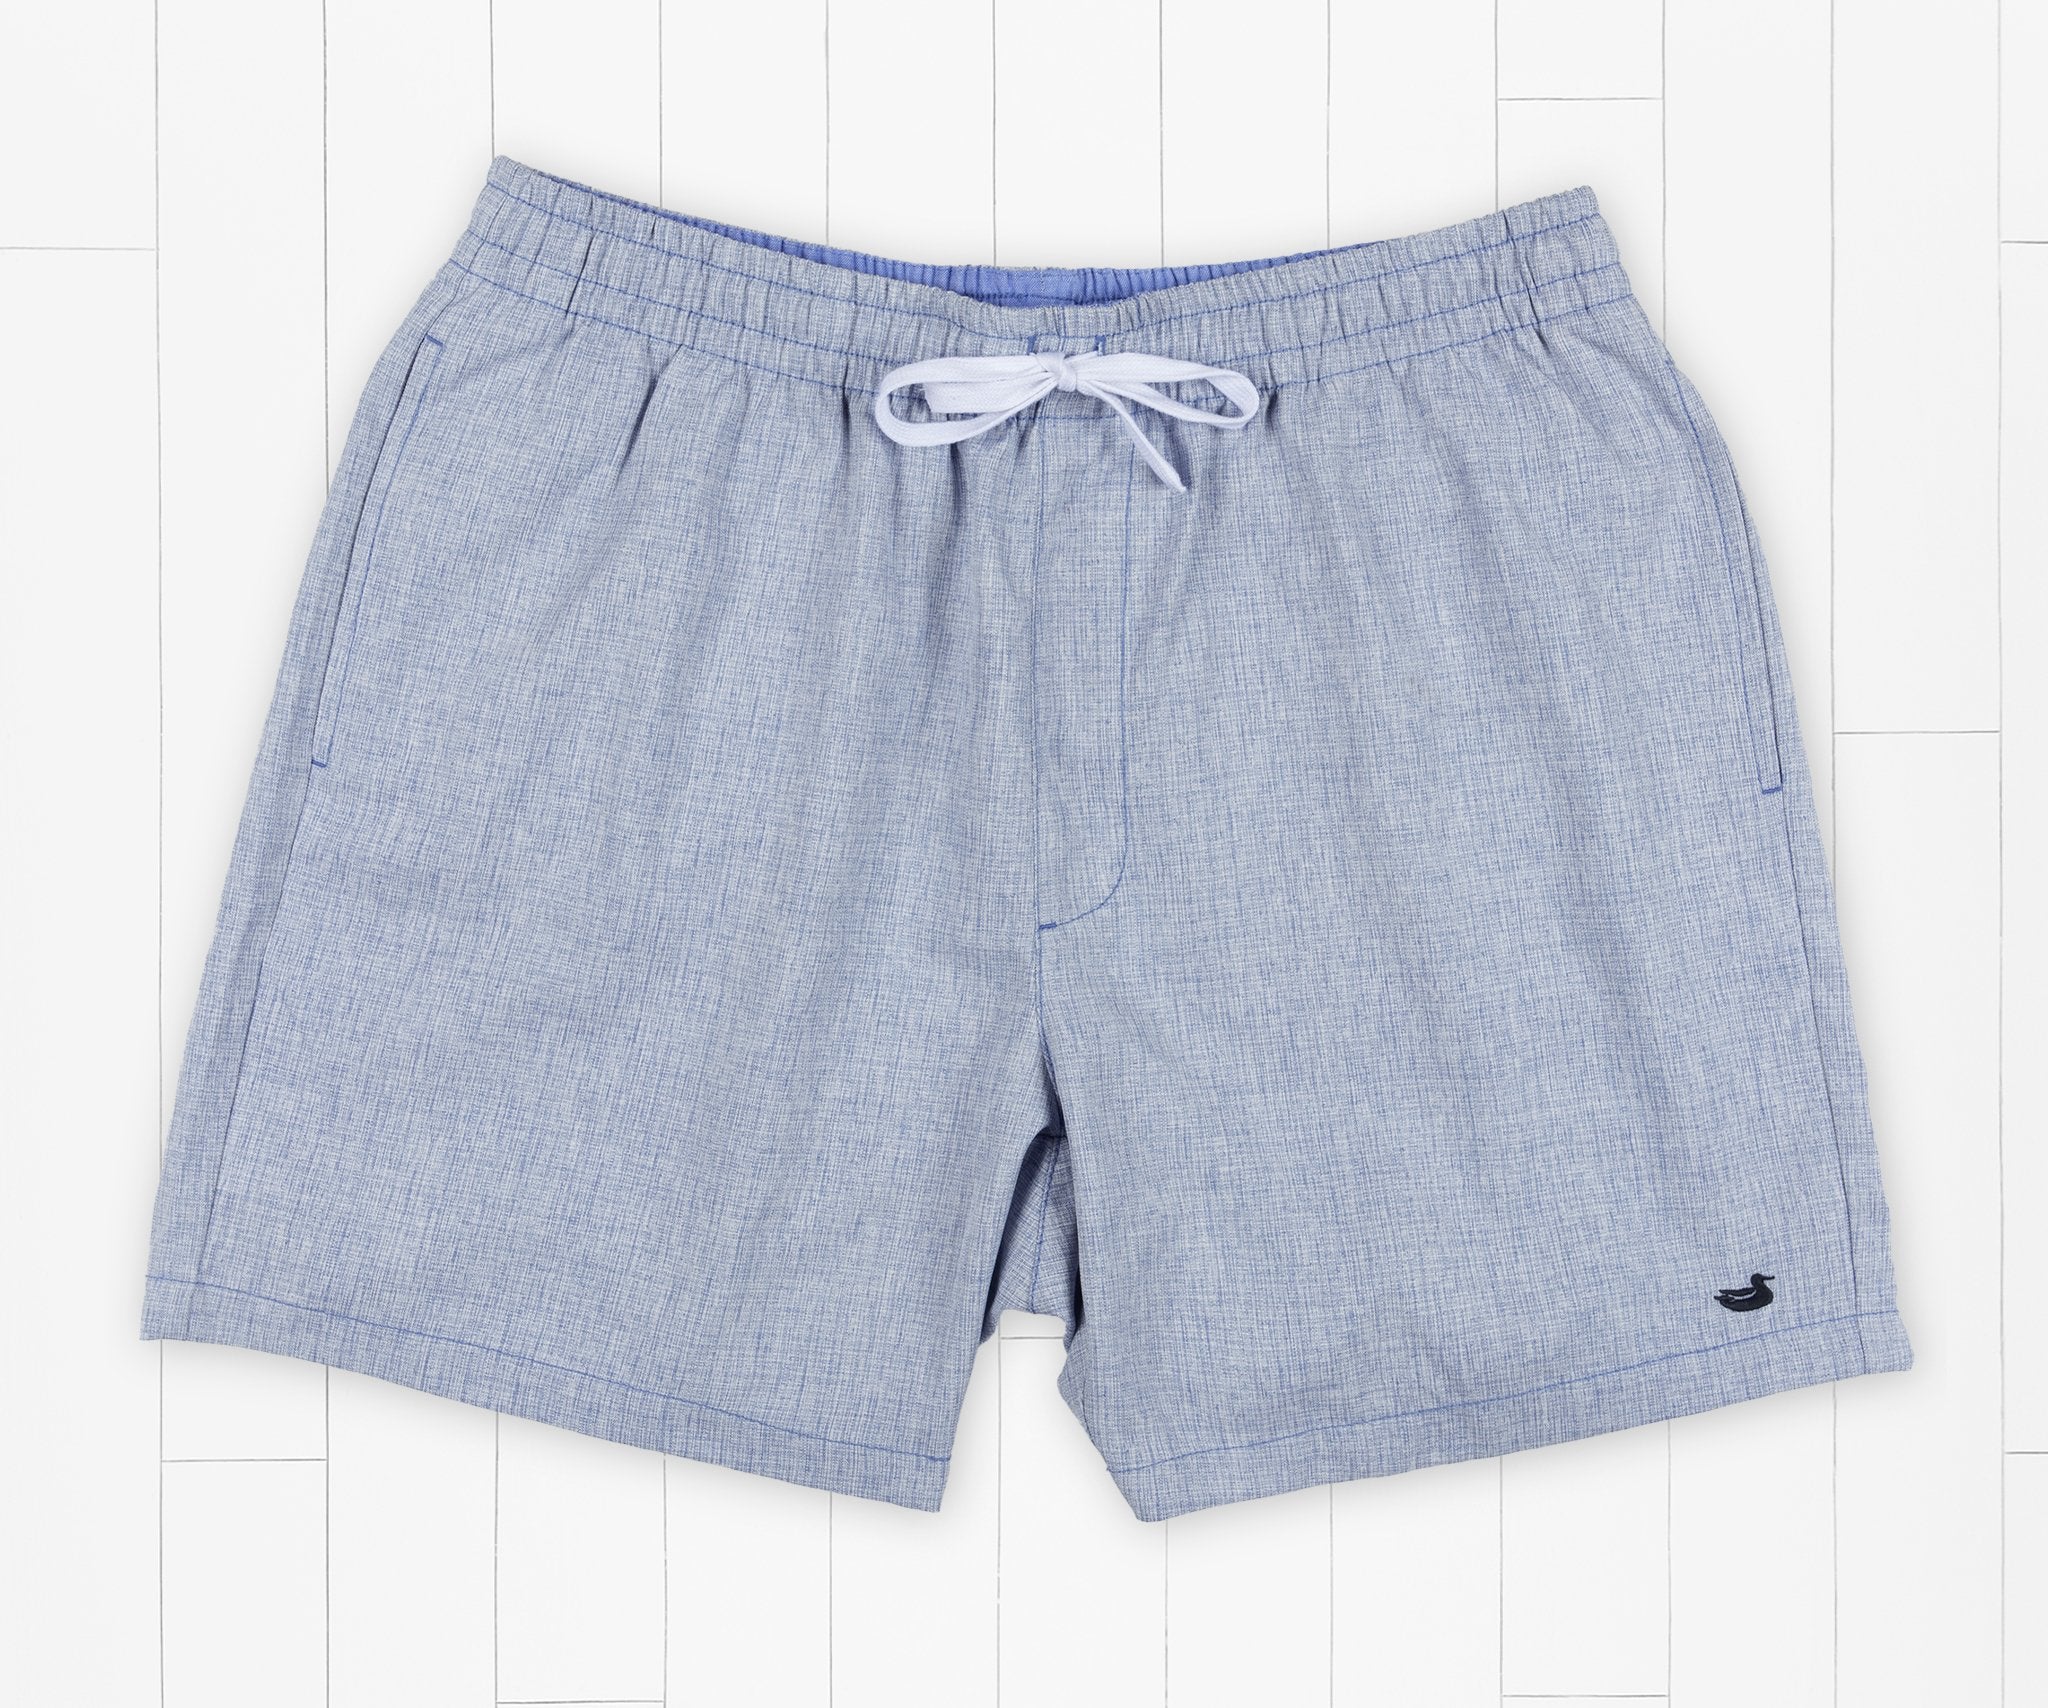 Southern Marsh Crawford Casual Shorts